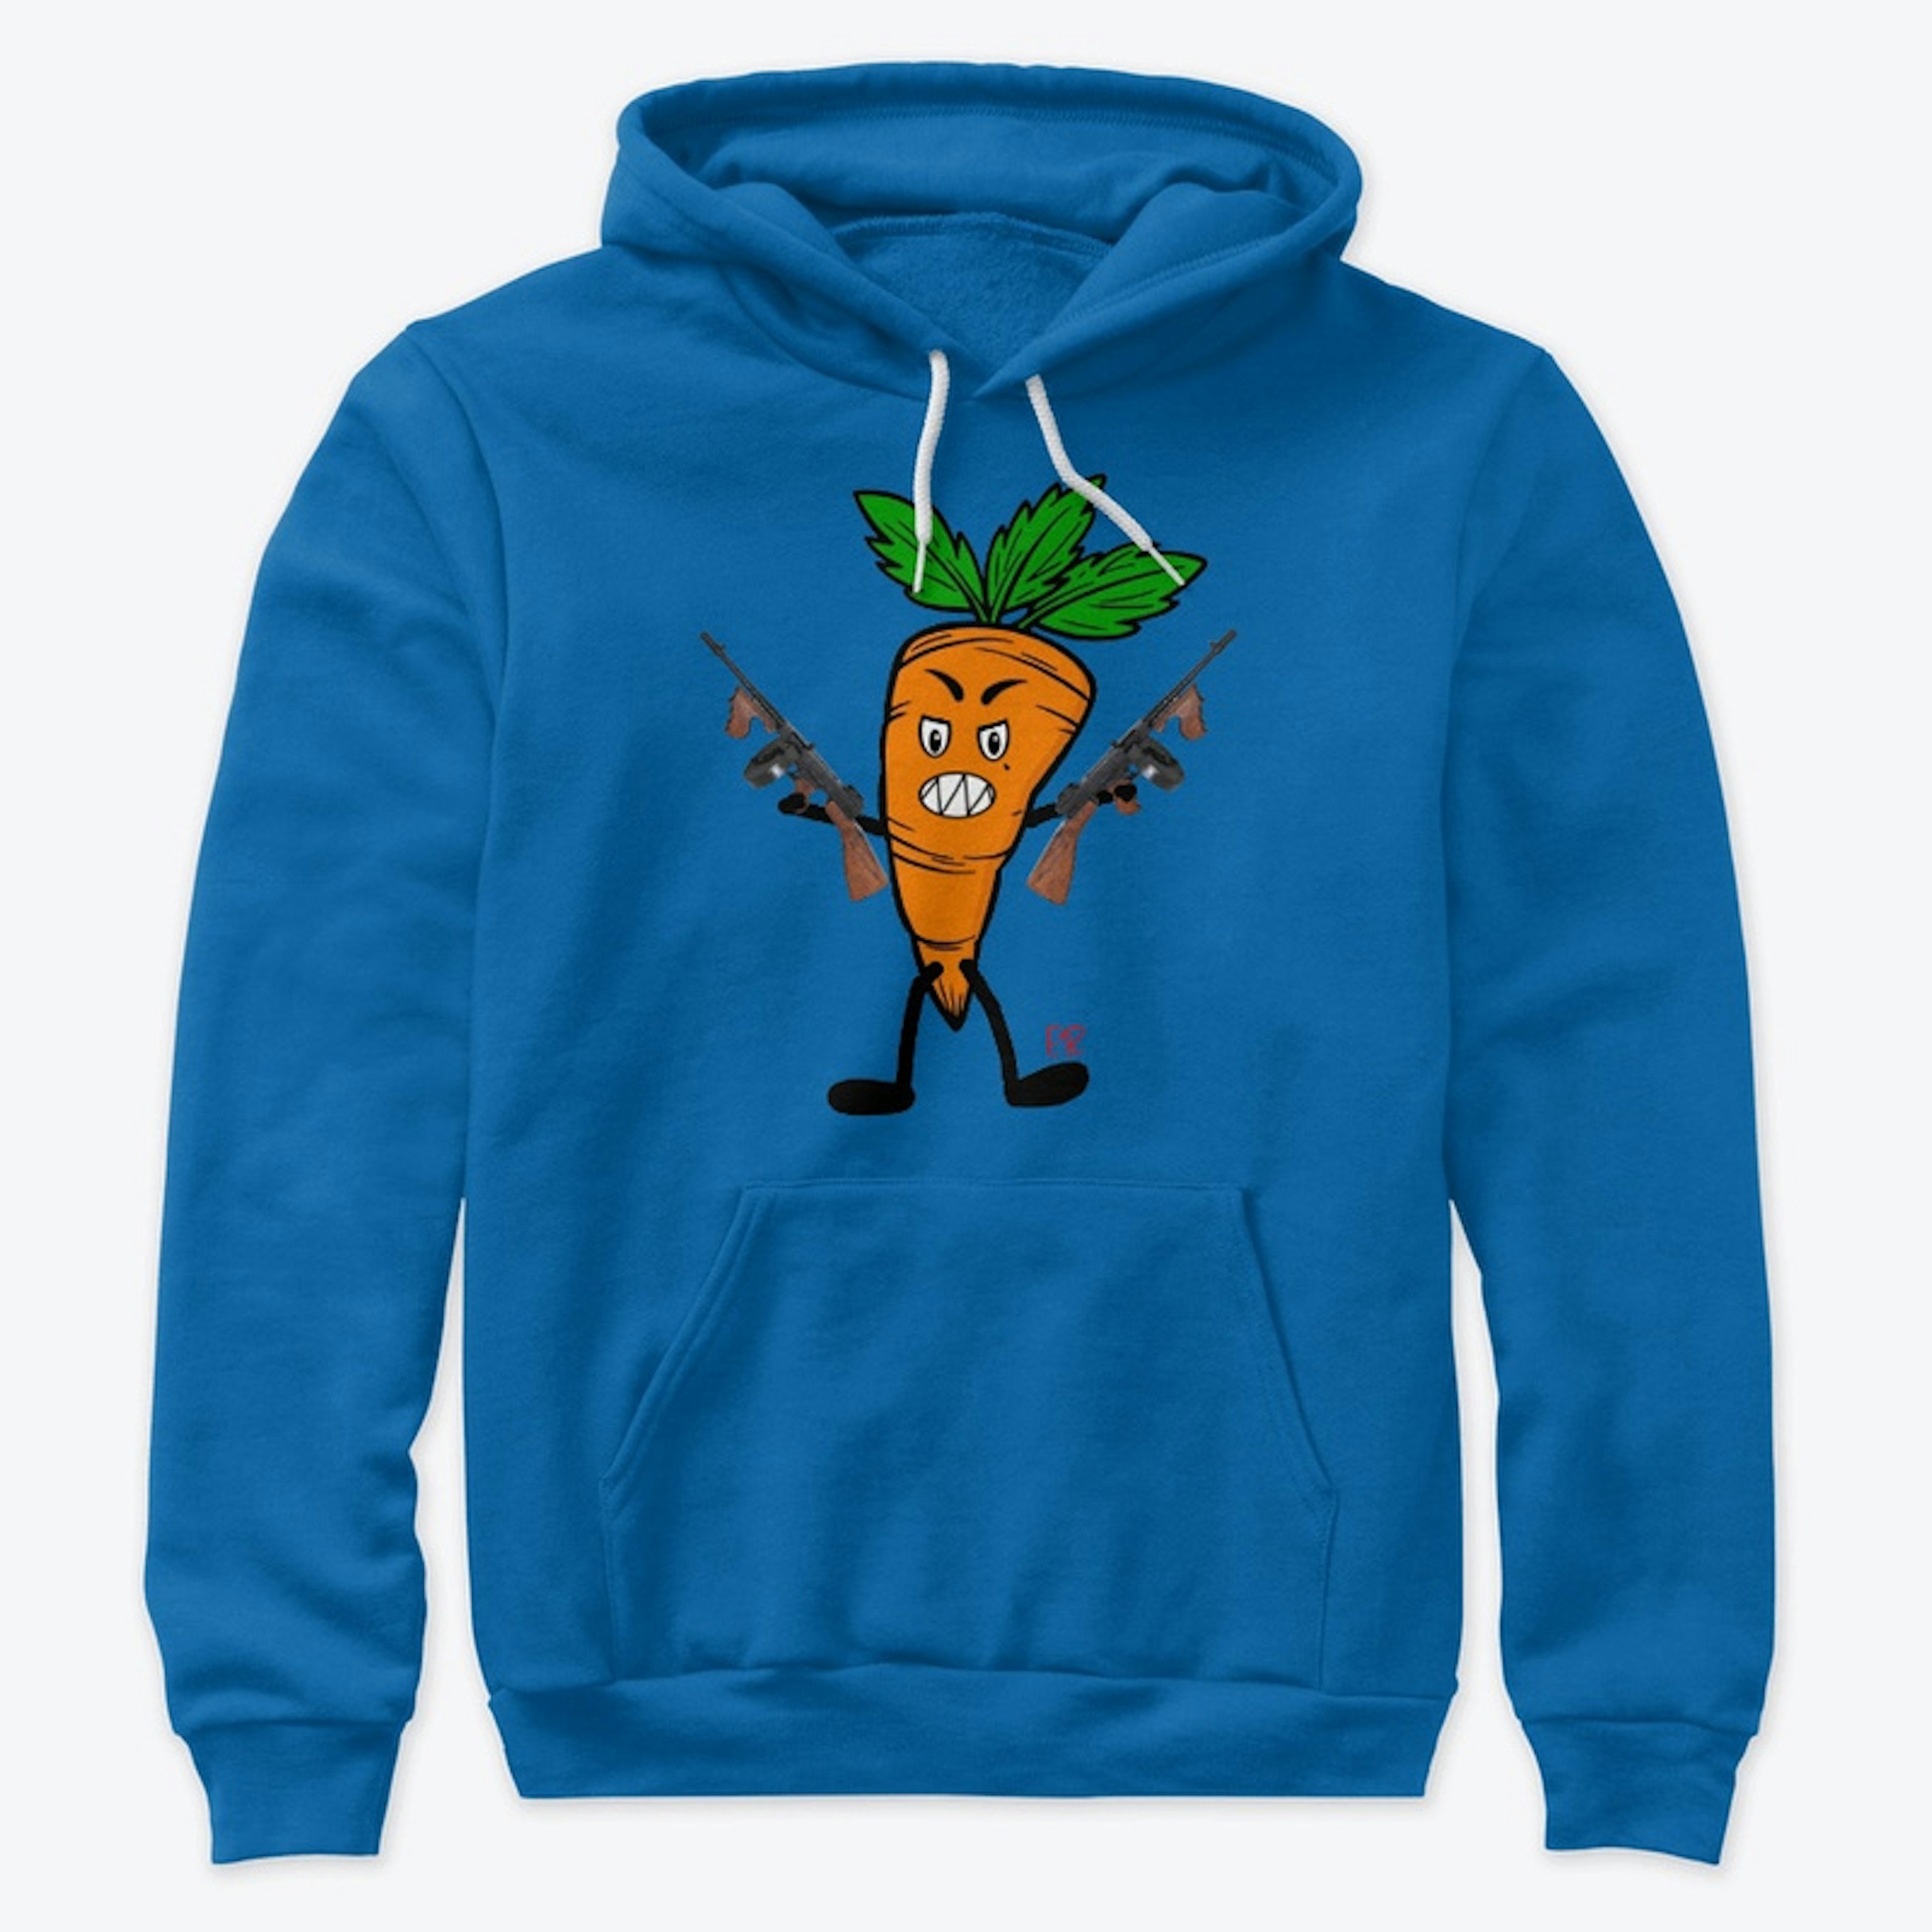 Carrot Sticks